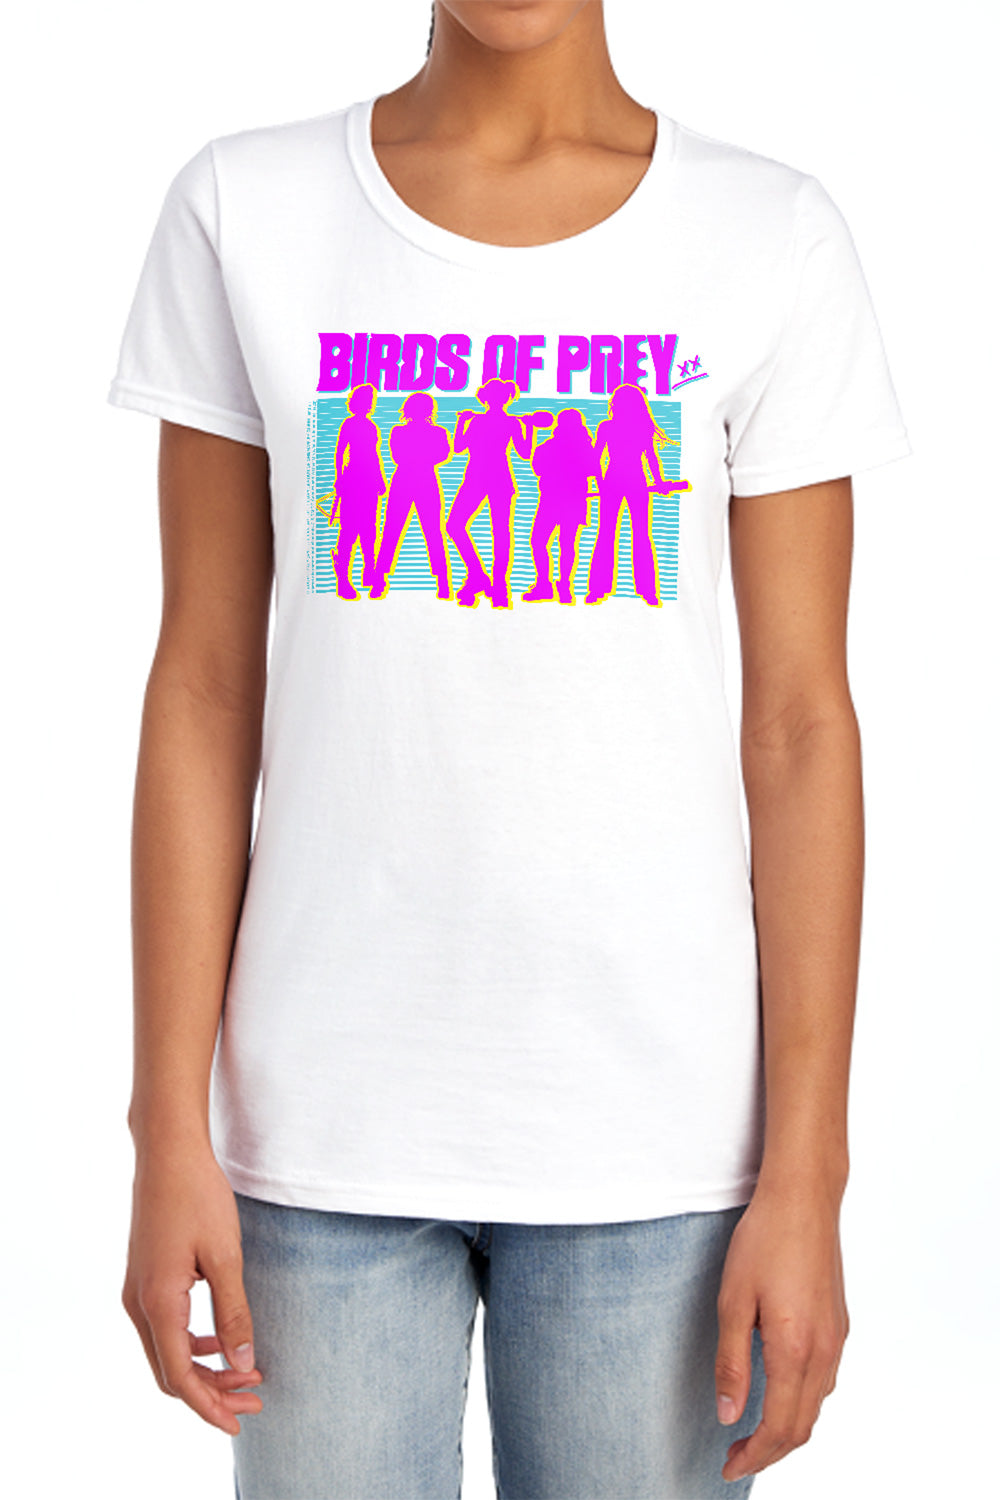 BIRDS OF PREY : SILHOUETTES WOMENS SHORT SLEEVE White XL